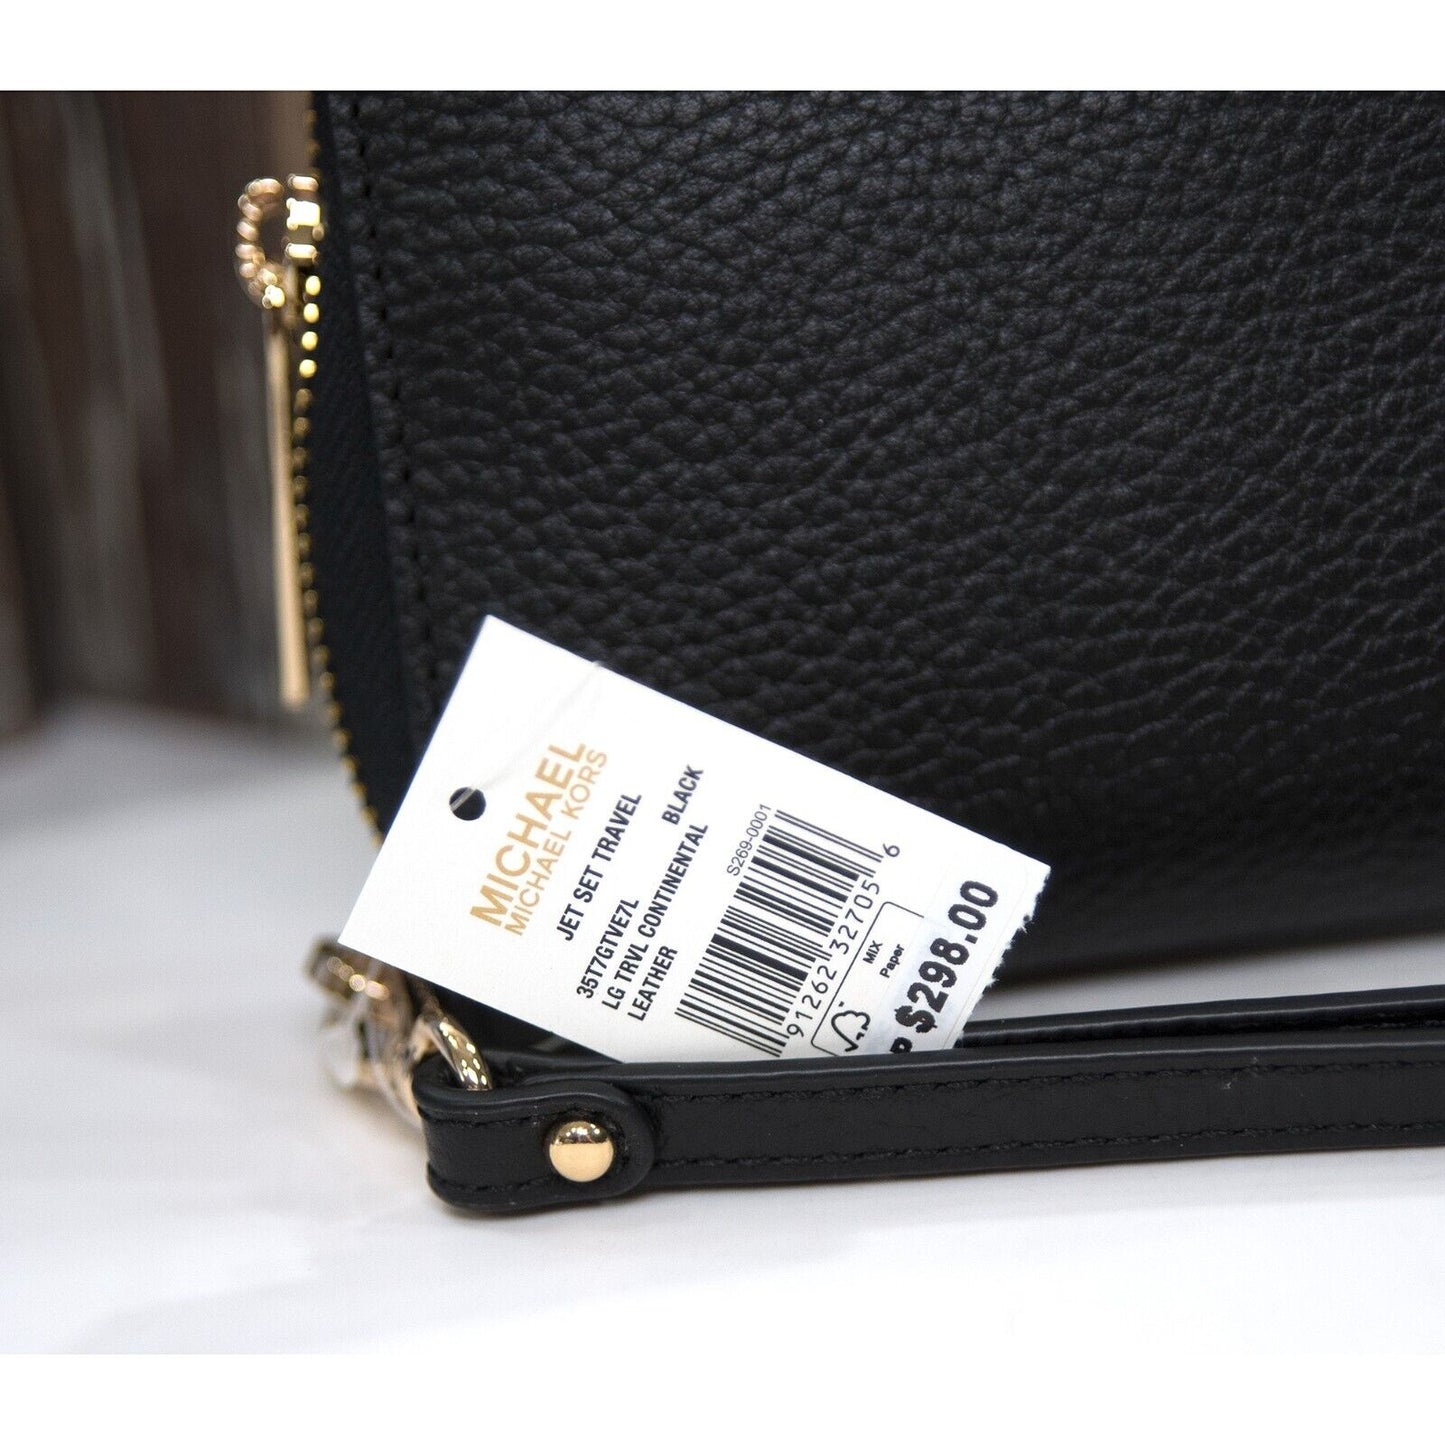 Michael Kors Black Pebbled Leather Zip Around Travel Wallet